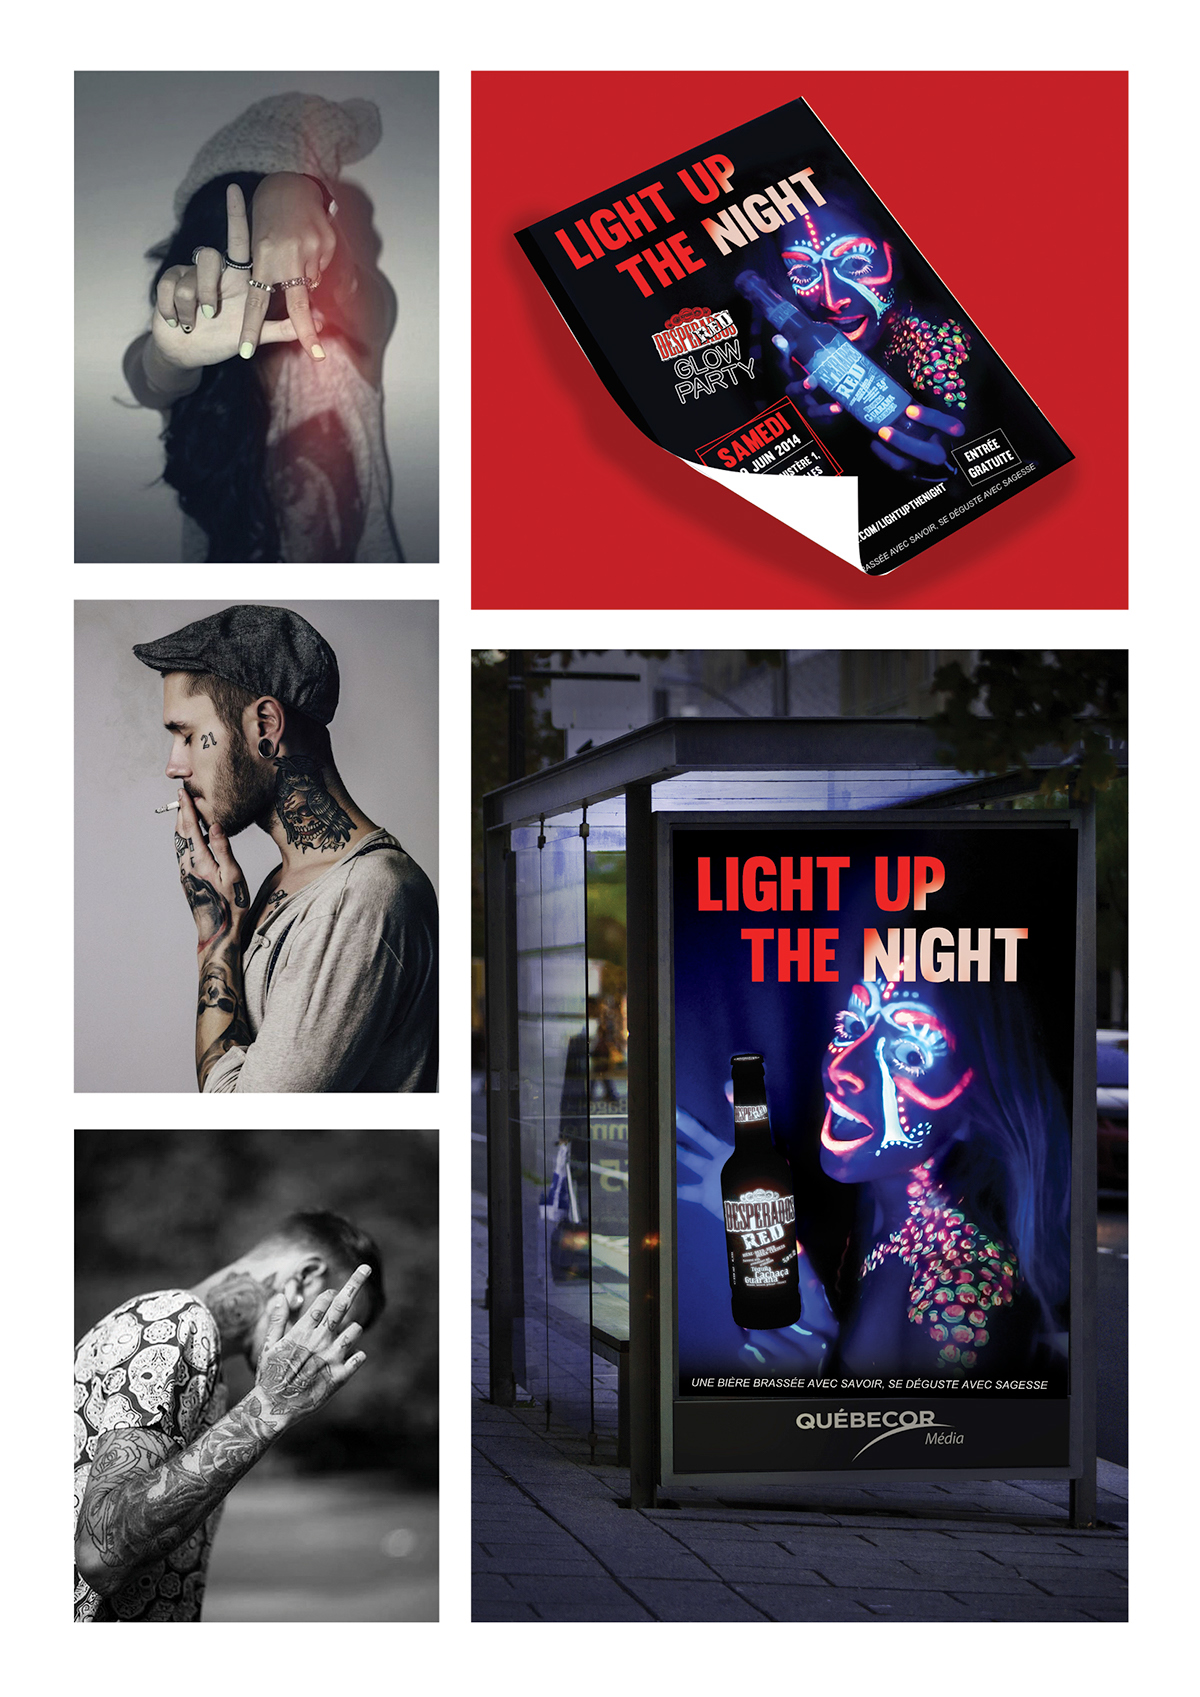 Adobe Photoshop campagne publicitaire concept